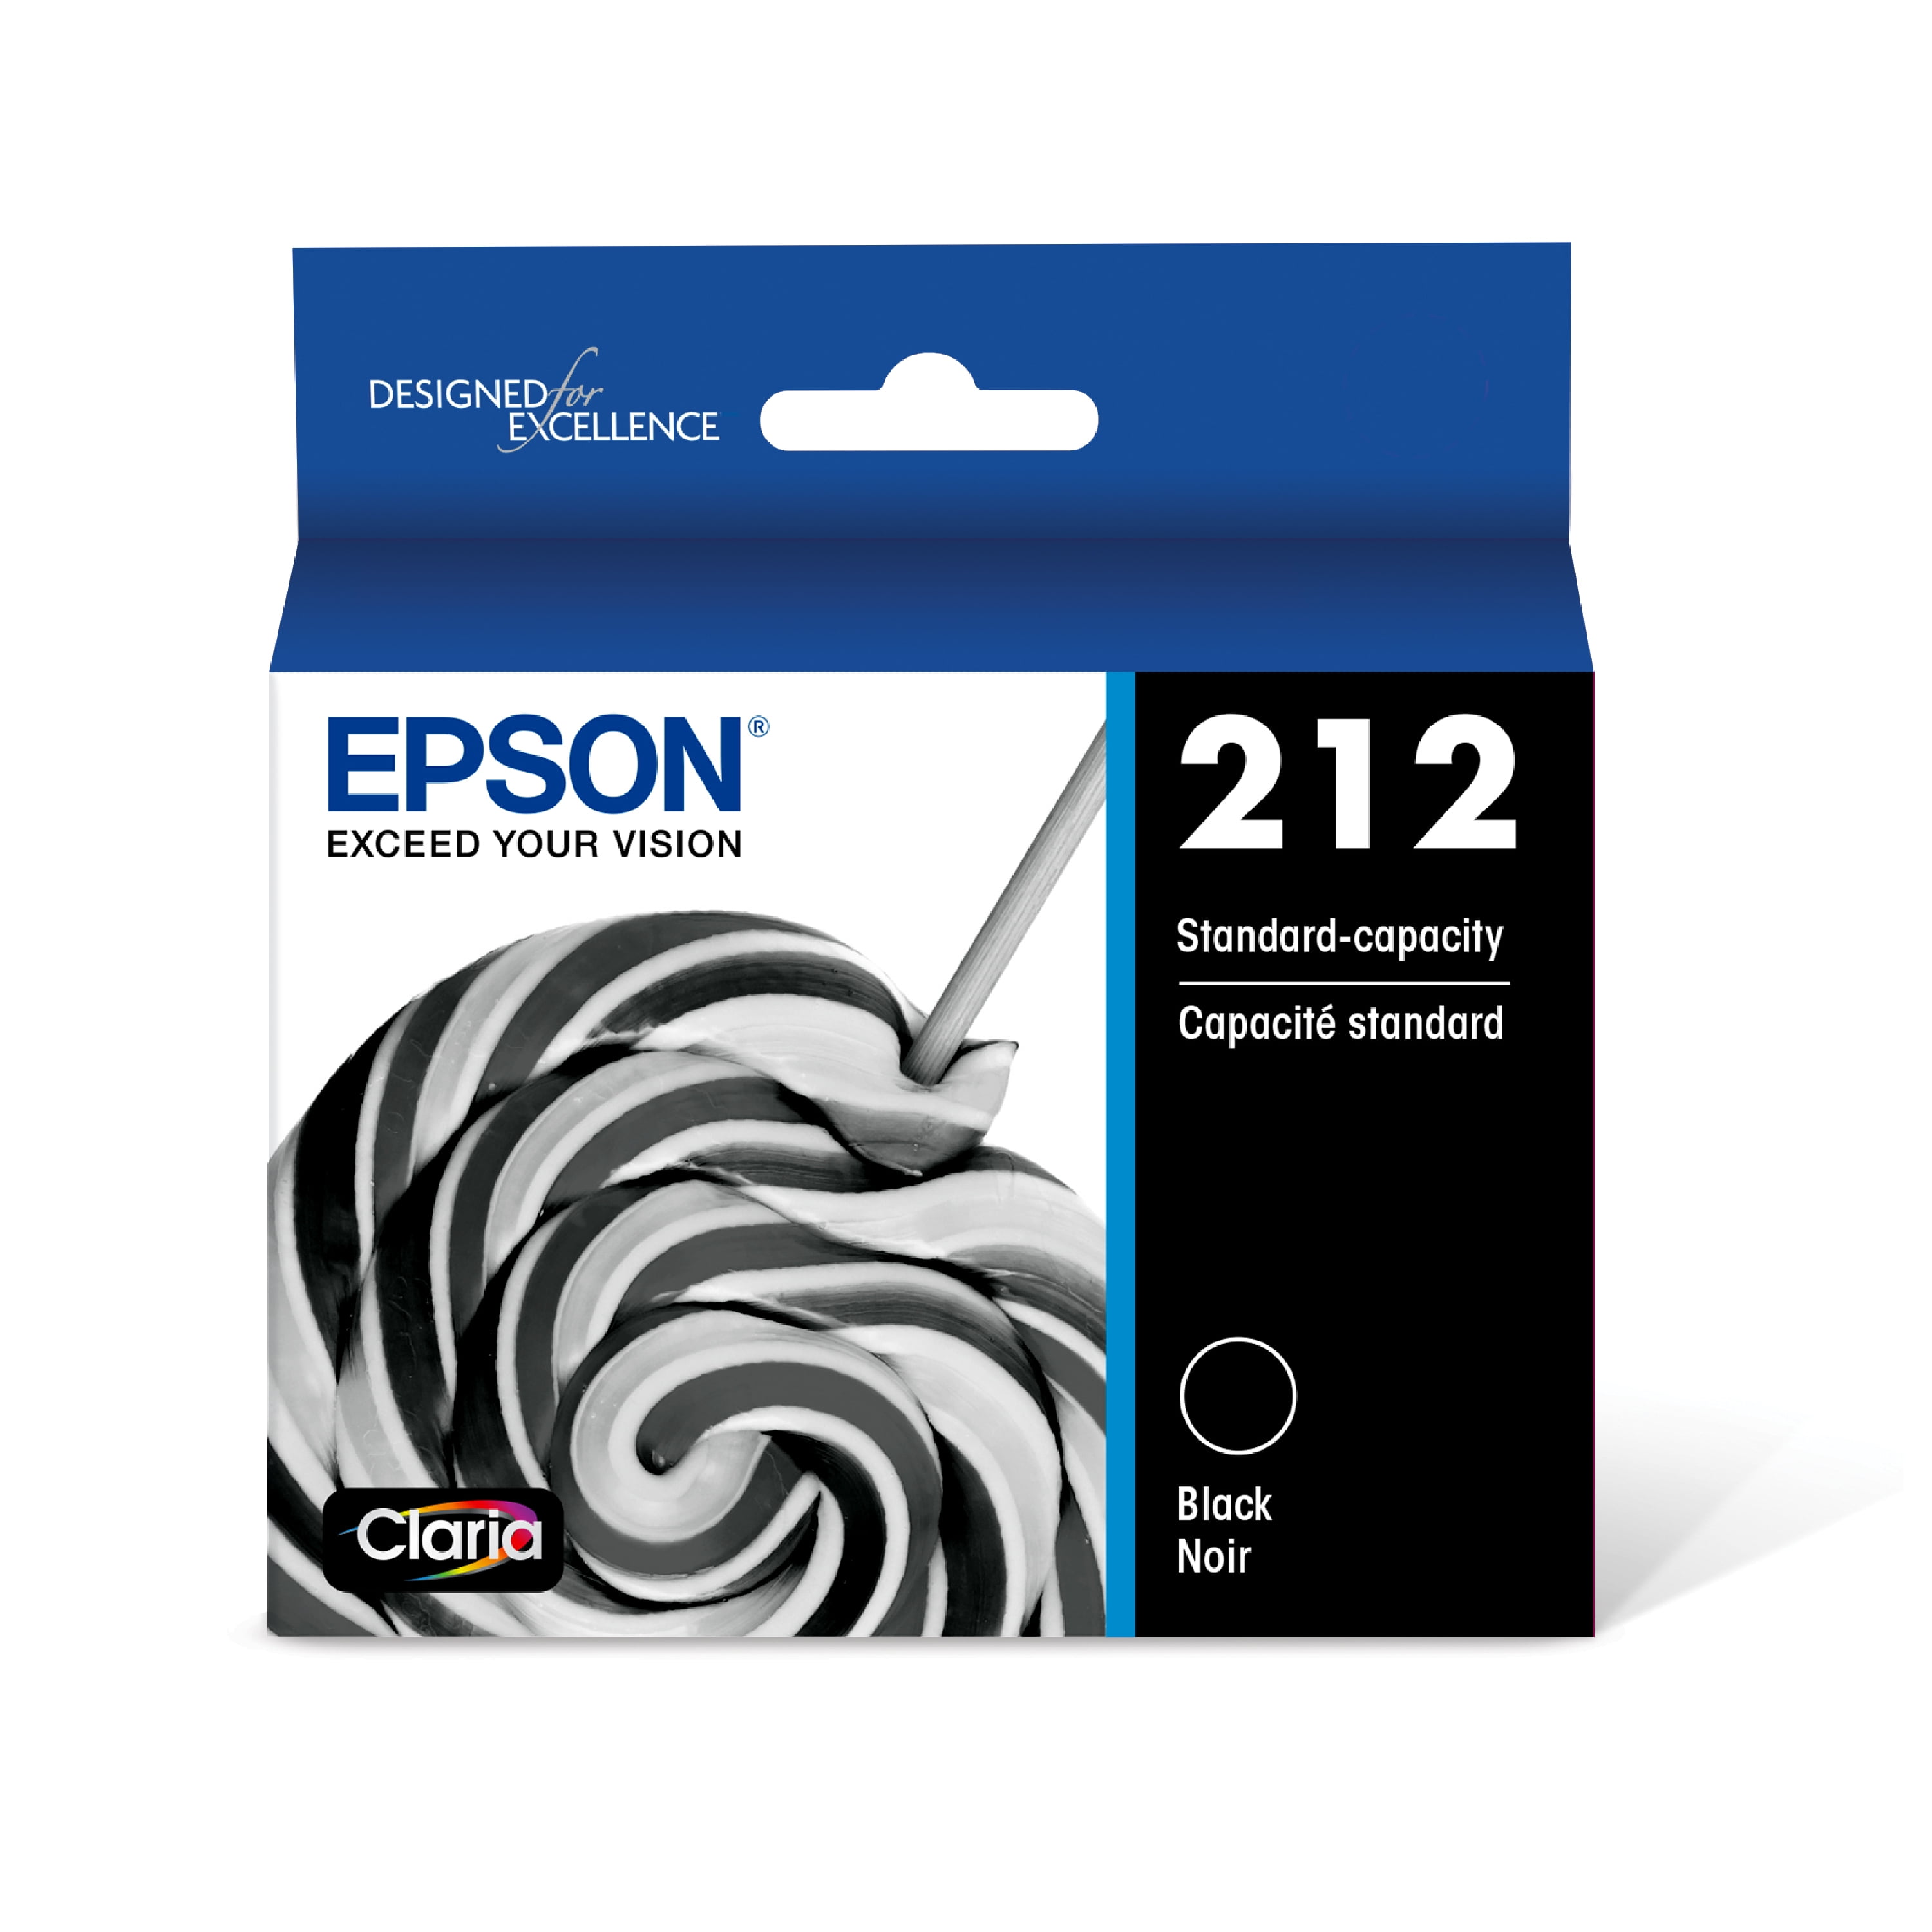 EPSON T212 Claria Genuine Ink Standard Capacity Black Cartridge